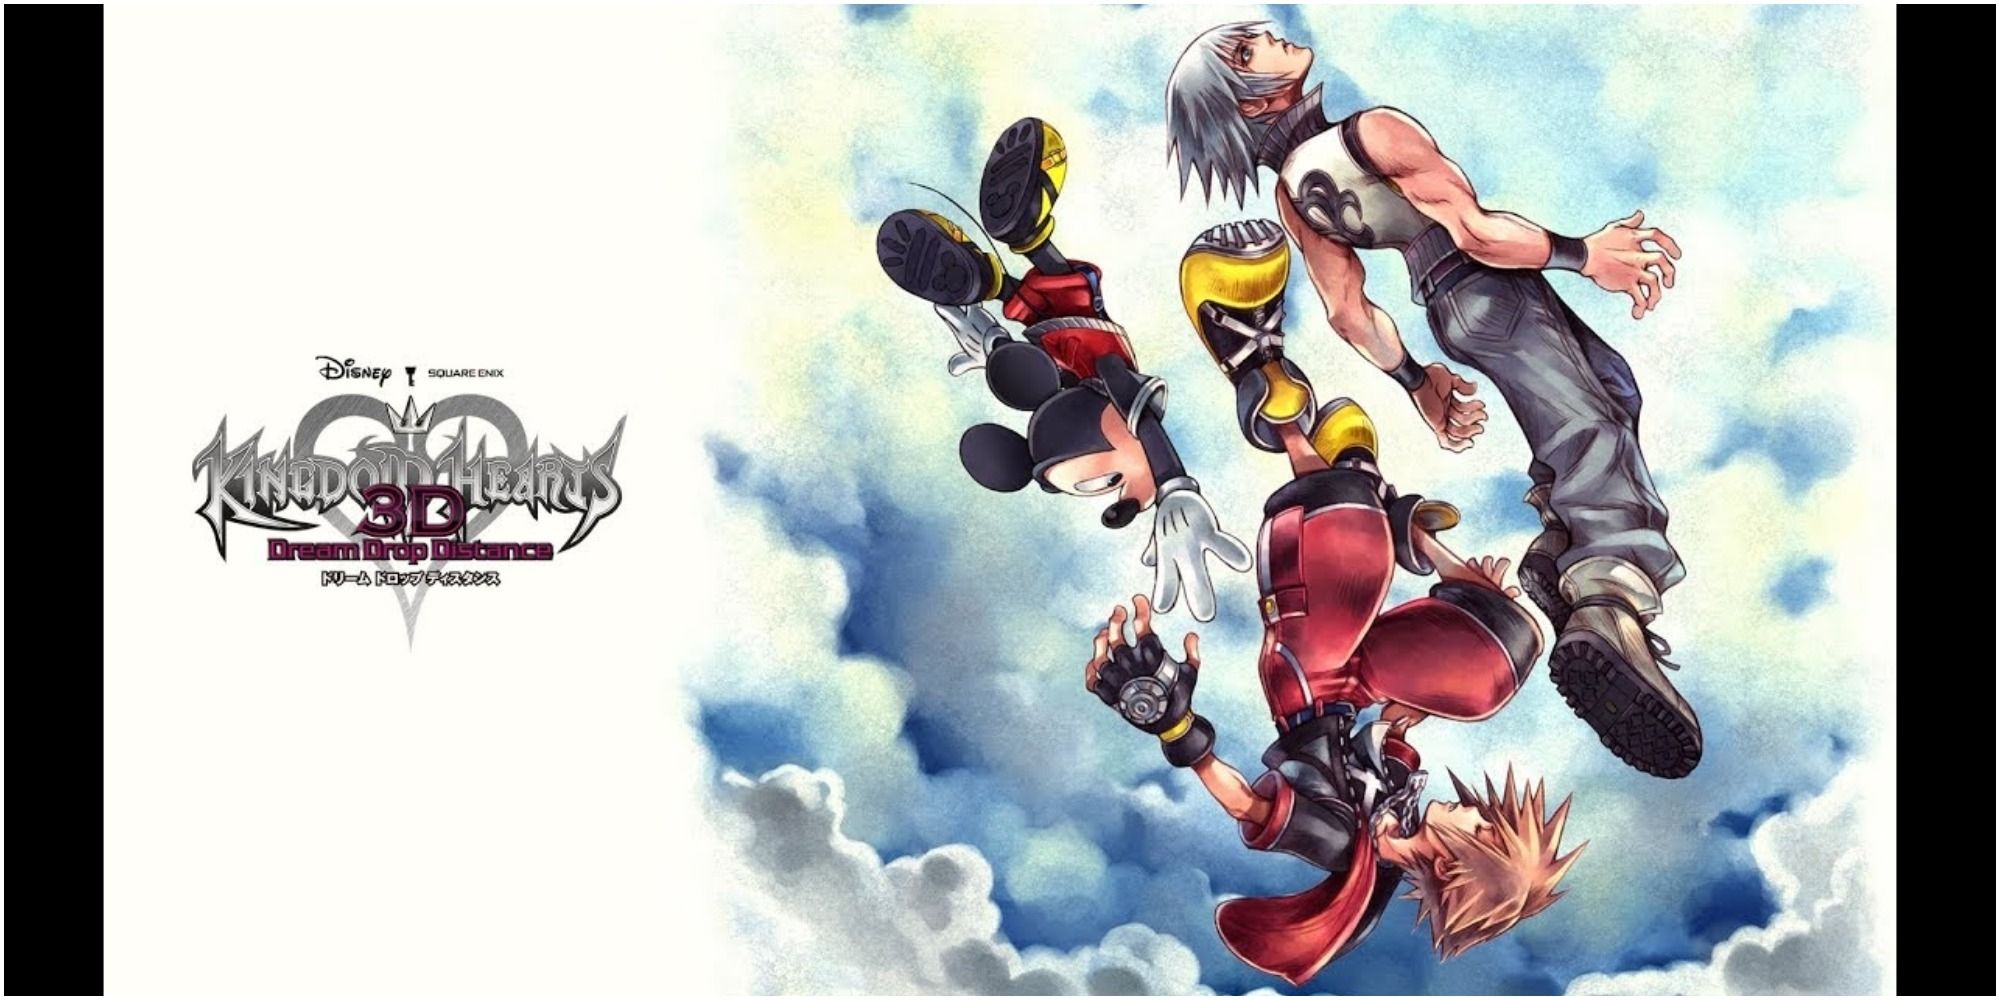 The box art for Kingdom Hearts 3D: Dream Drop Distance, featuring Mickey, Sora, and Riku.